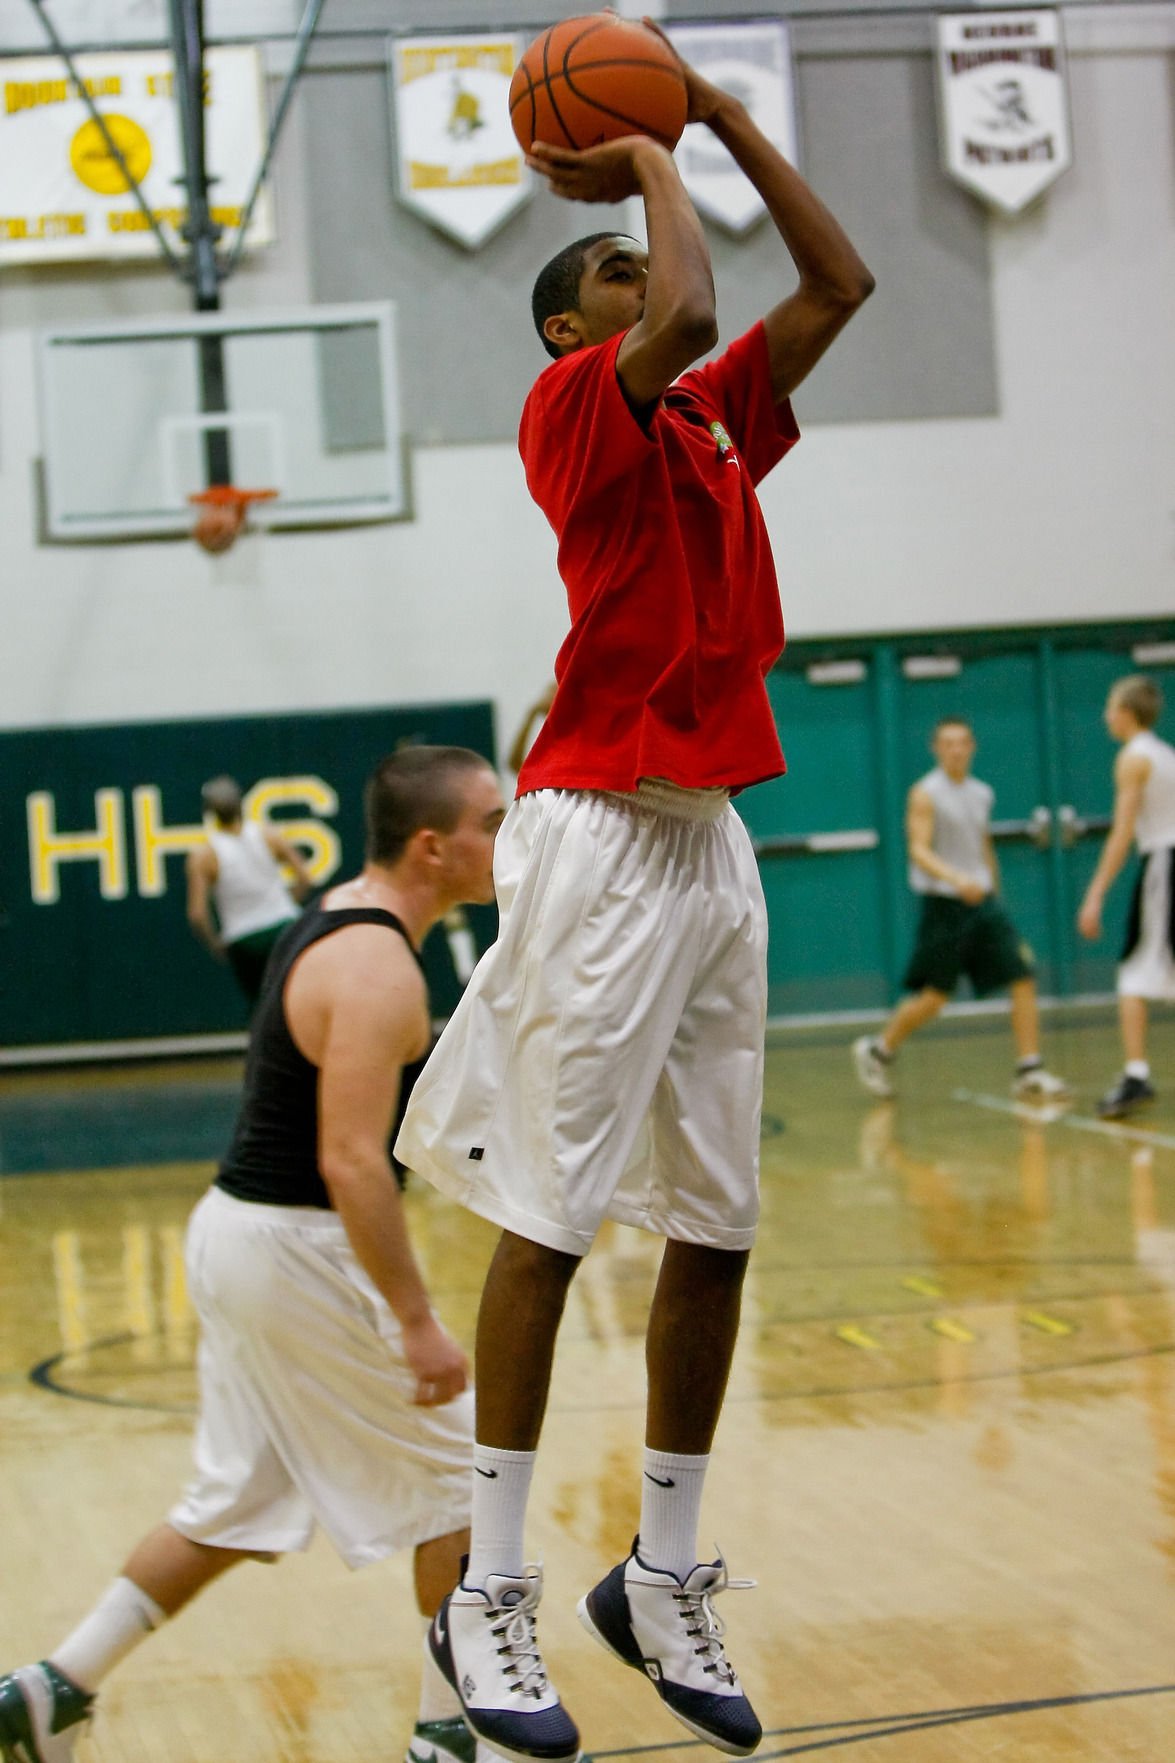 Gallery: Huntington High School basketball practice | Photo Galleries